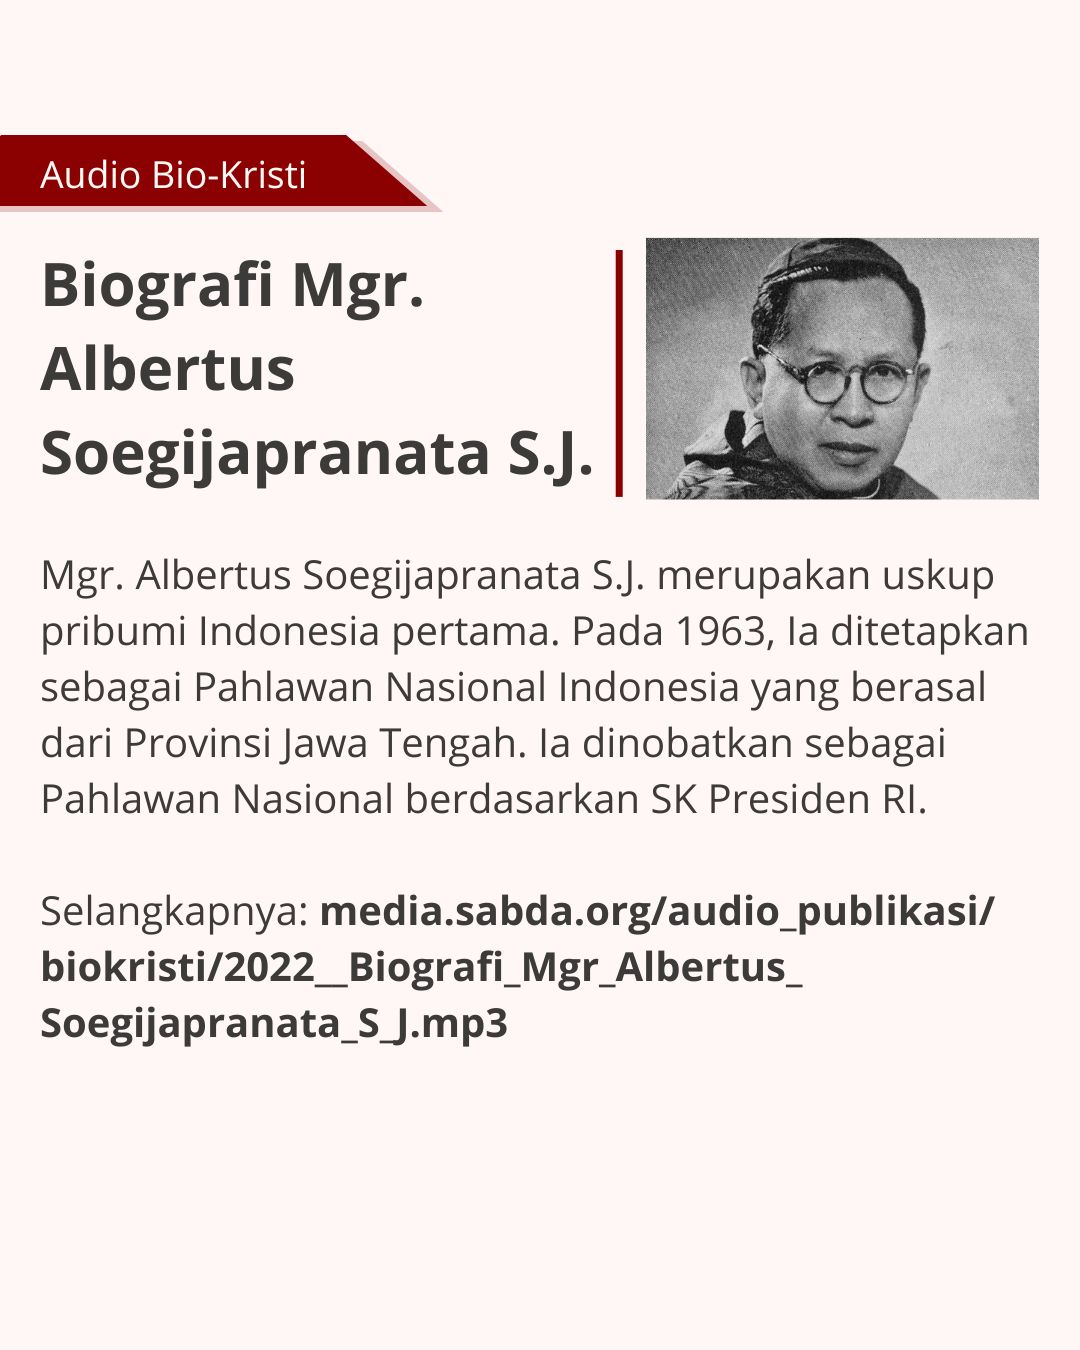 Mgr. Albertus Soegijapranata, SJ, Uskup pribumi pertama.